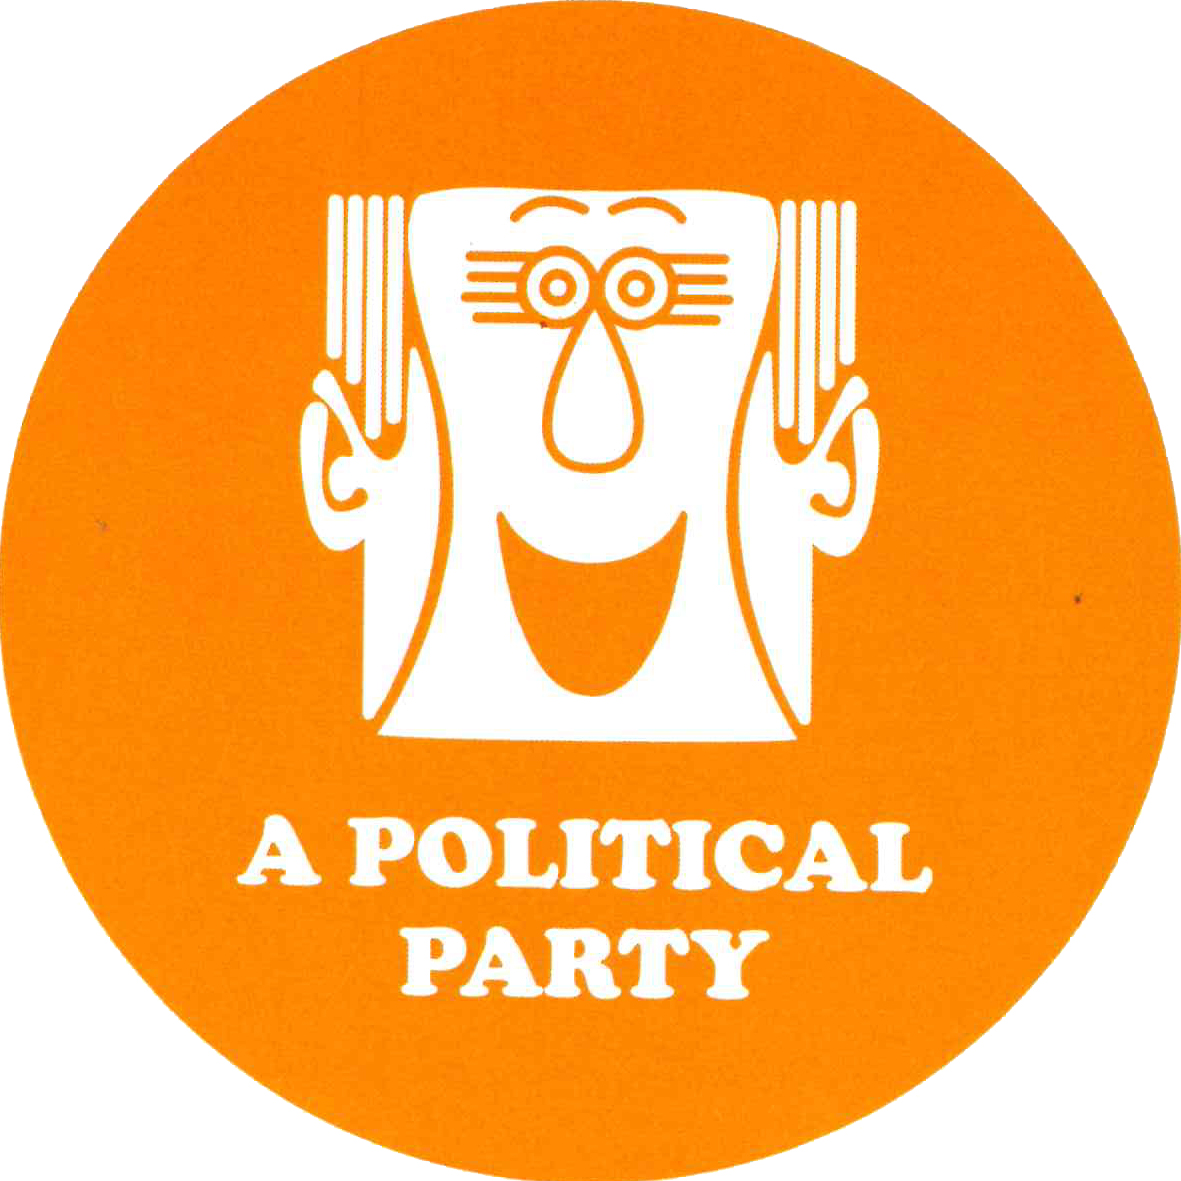 A POLITICAL PARTY